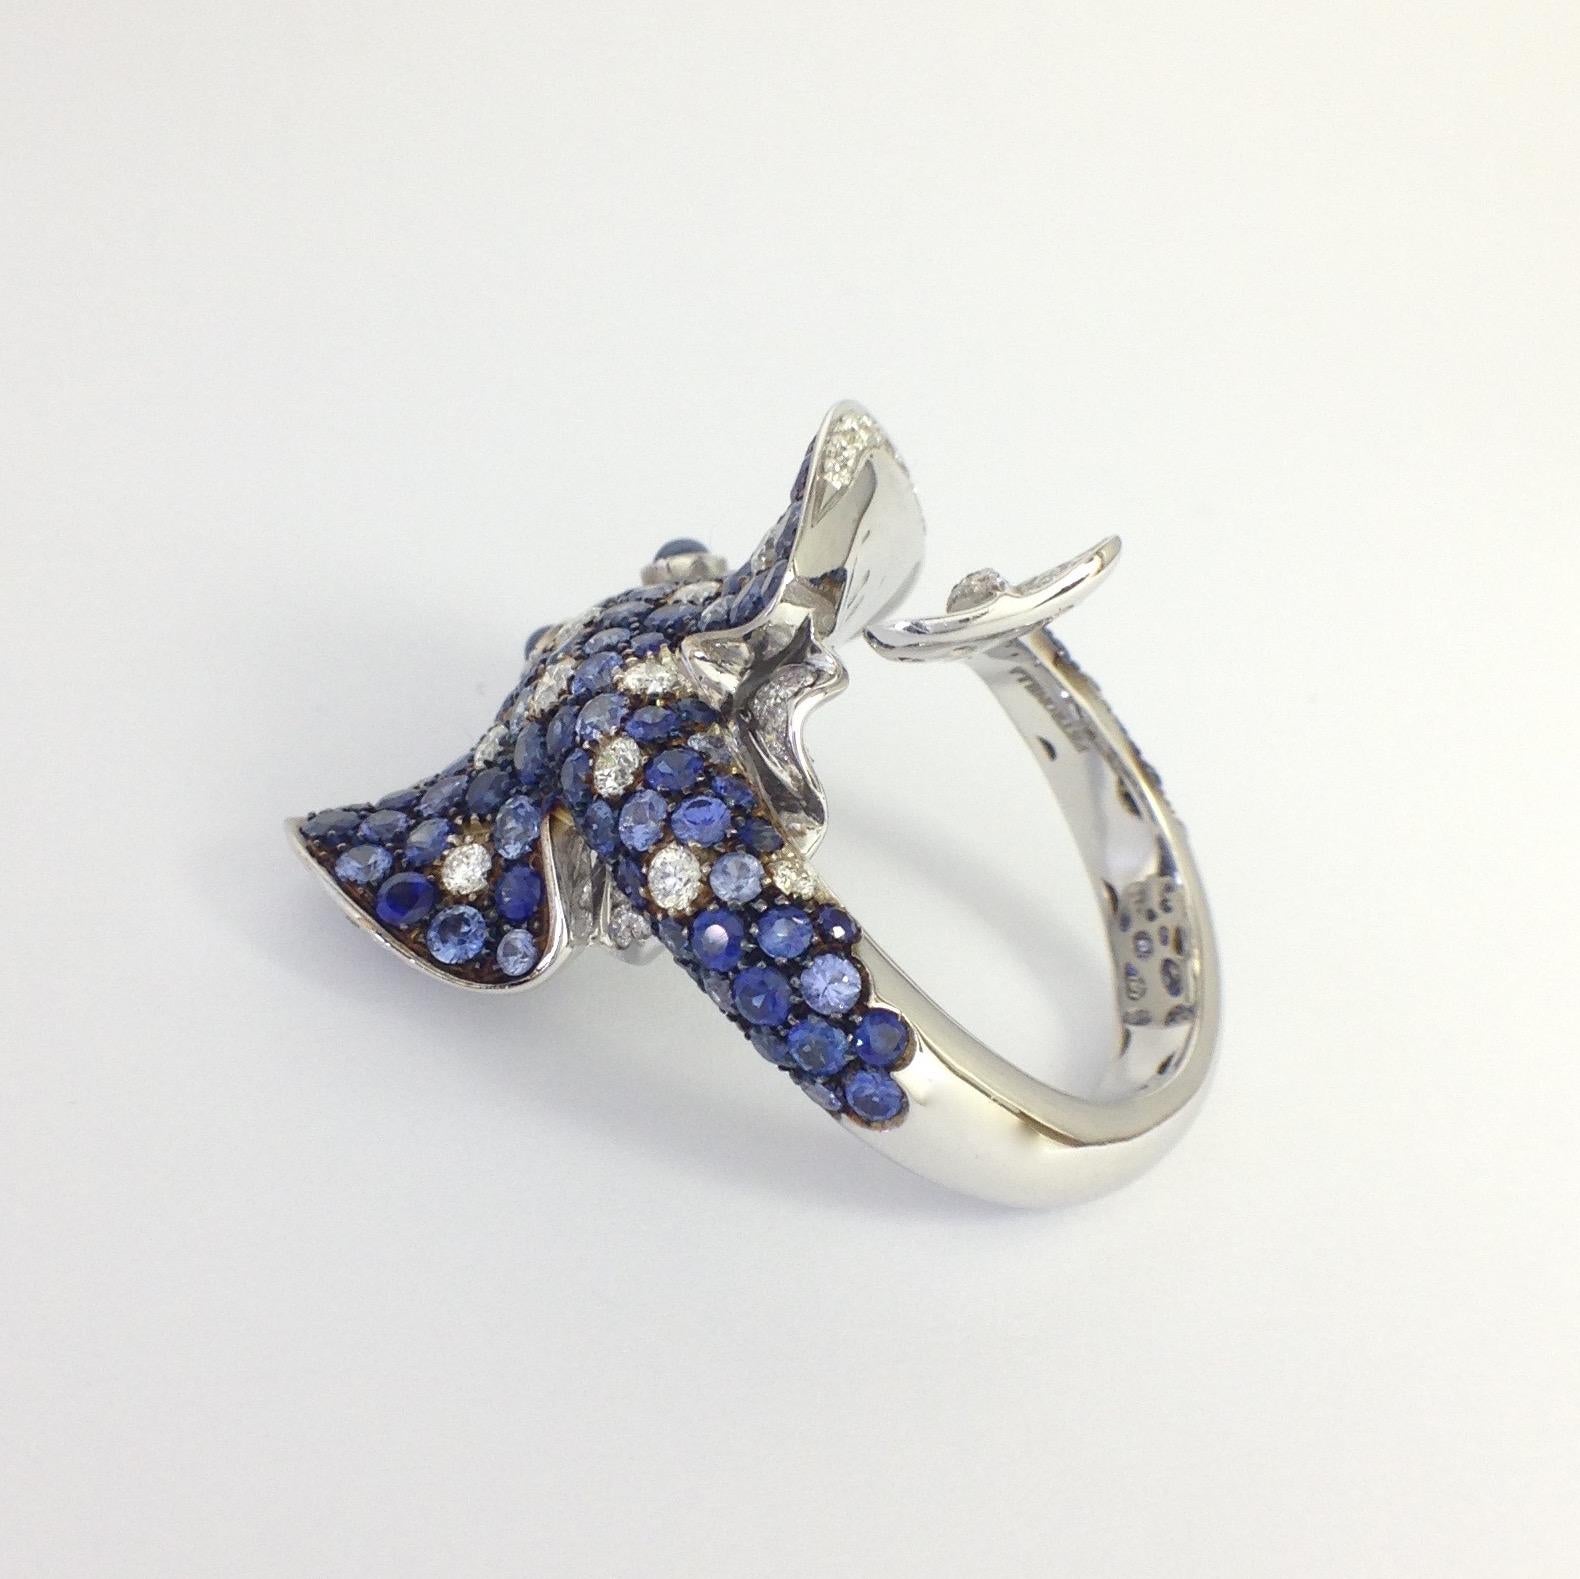 Ray Fish White Diamond Blue Sapphire 18 Karat Gold Ring Made in Italy Petronilla 6